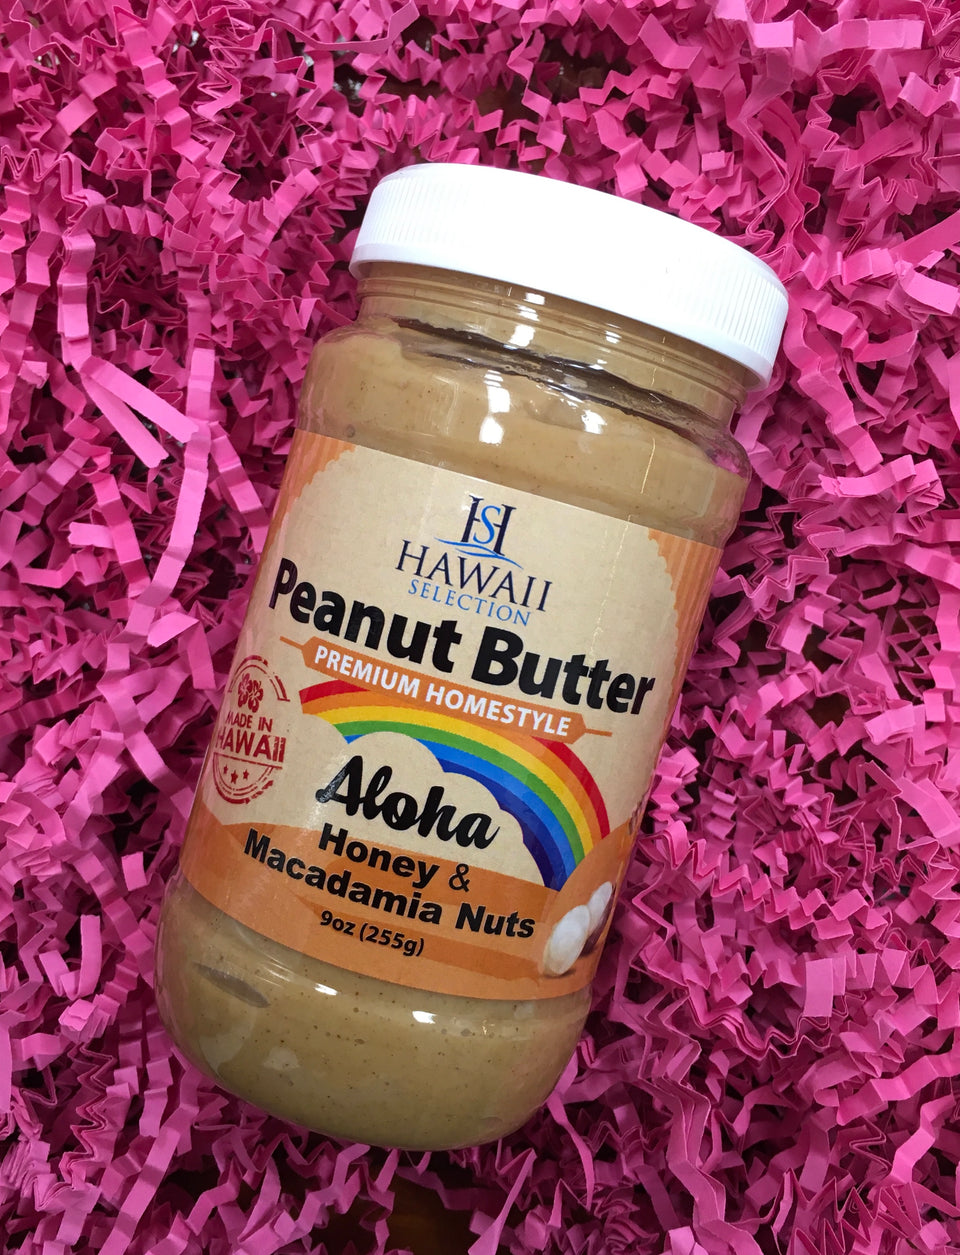 Close up of Hawaiian Peanut butter with Honey and Macadamia Nuts